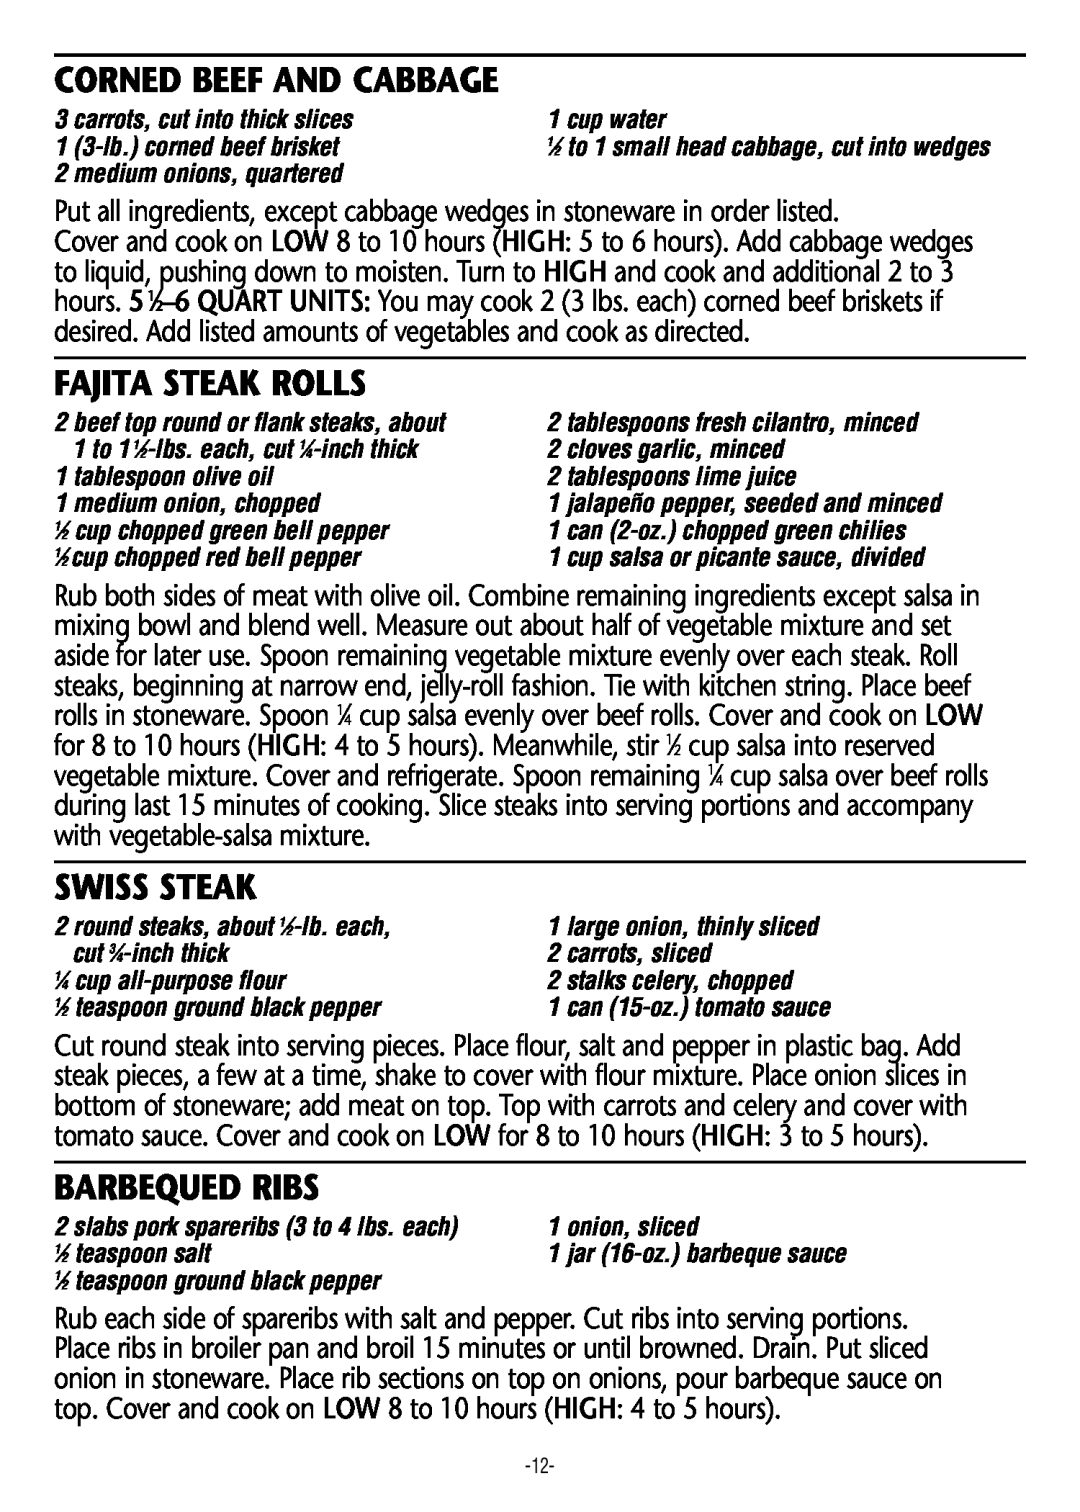 Rival 3745 manual Corned Beef And Cabbage, Fajita Steak Rolls, Swiss Steak, Barbequed Ribs 